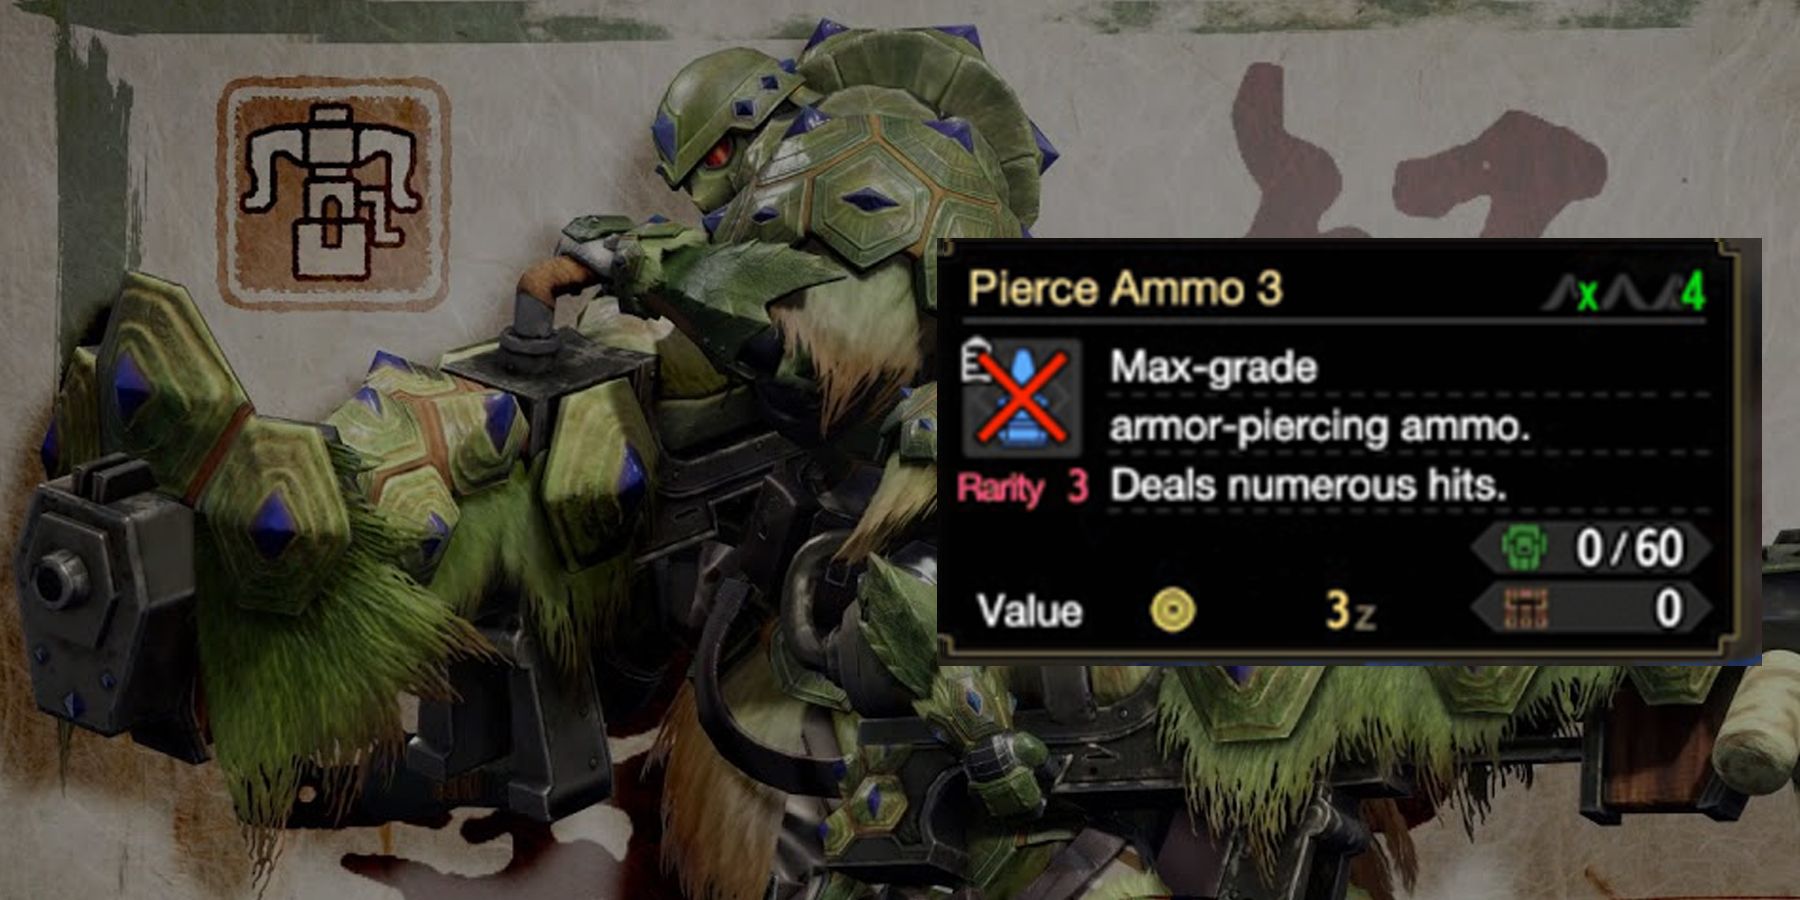 Pierce Ammo 3